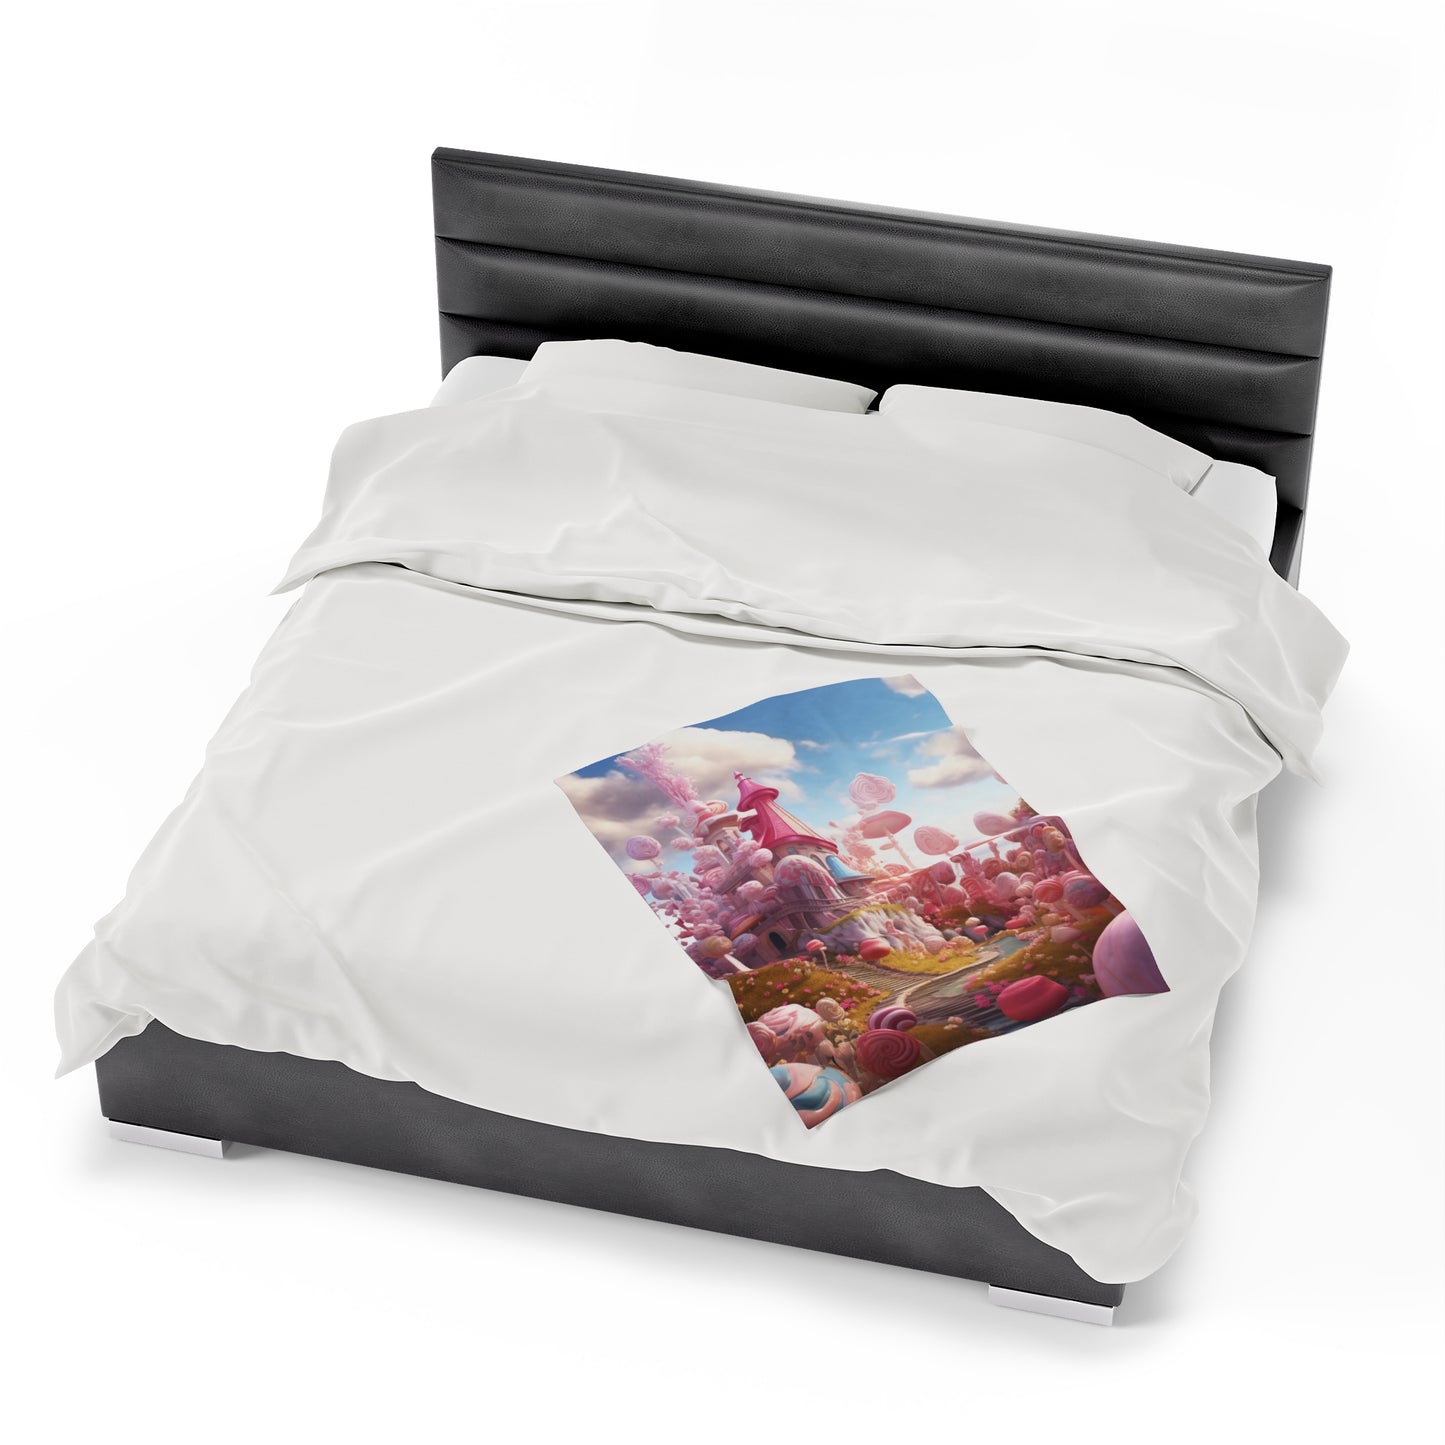 Niccie's Luxurious Fantastical Delights Velveteen Plush Blanket - Cozy Elegance for Ultimate Comfort